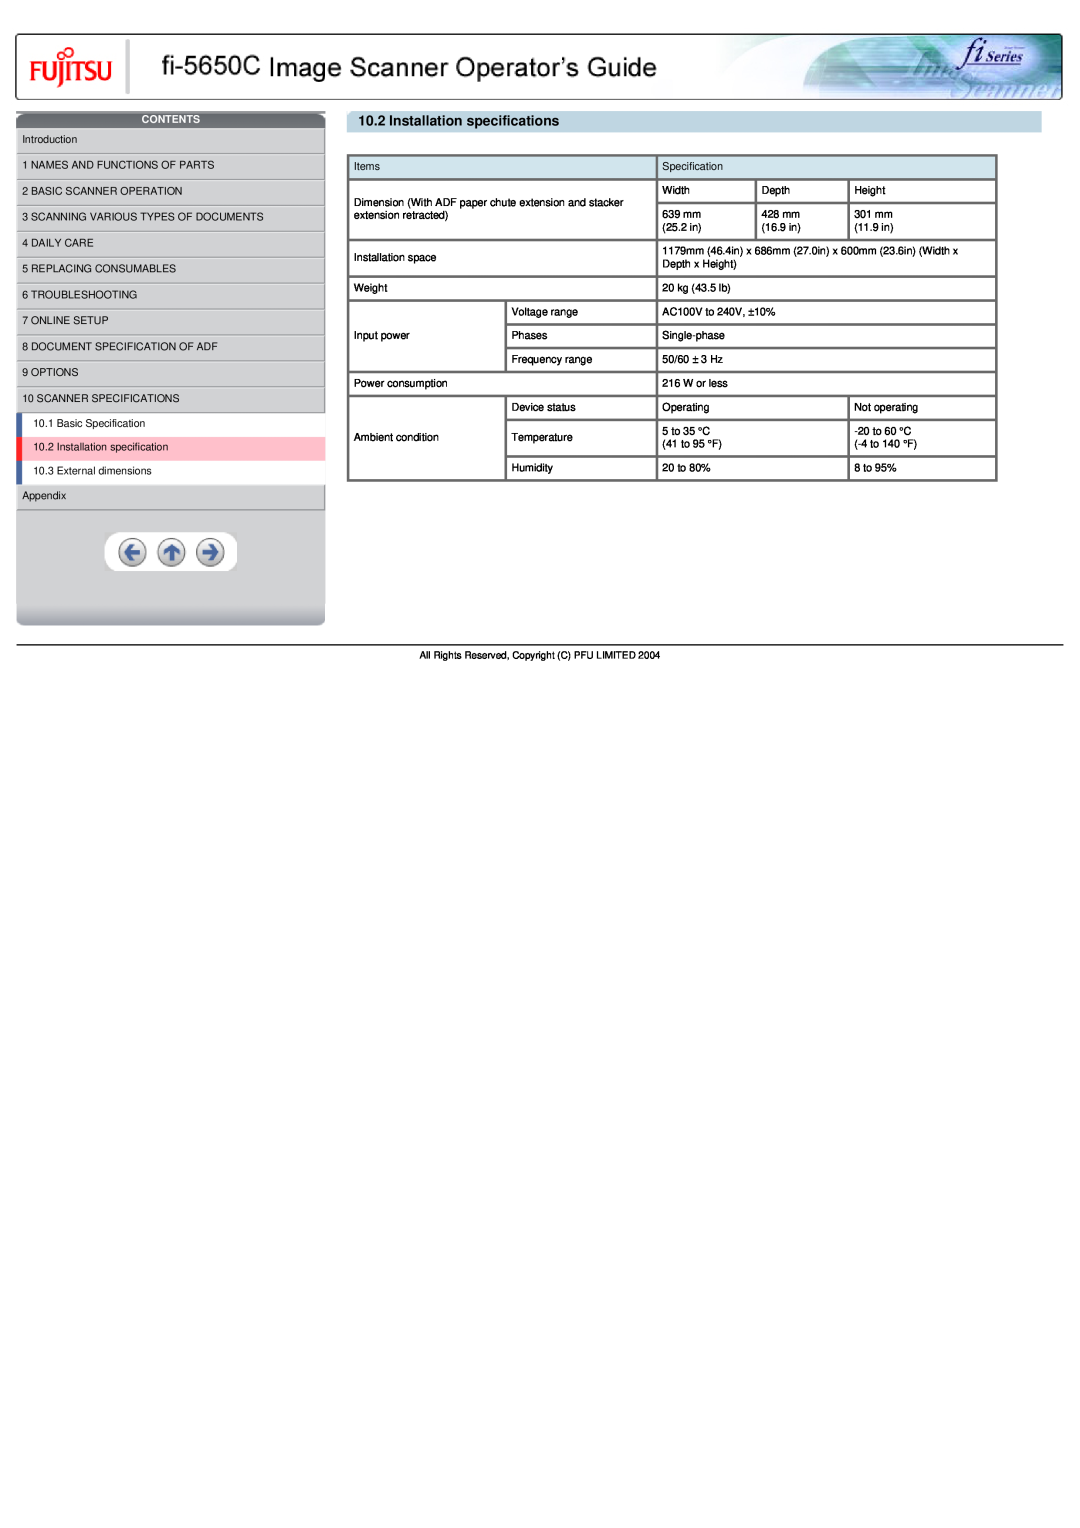 Fujitsu fi-5650C Installation specifications, Contents 